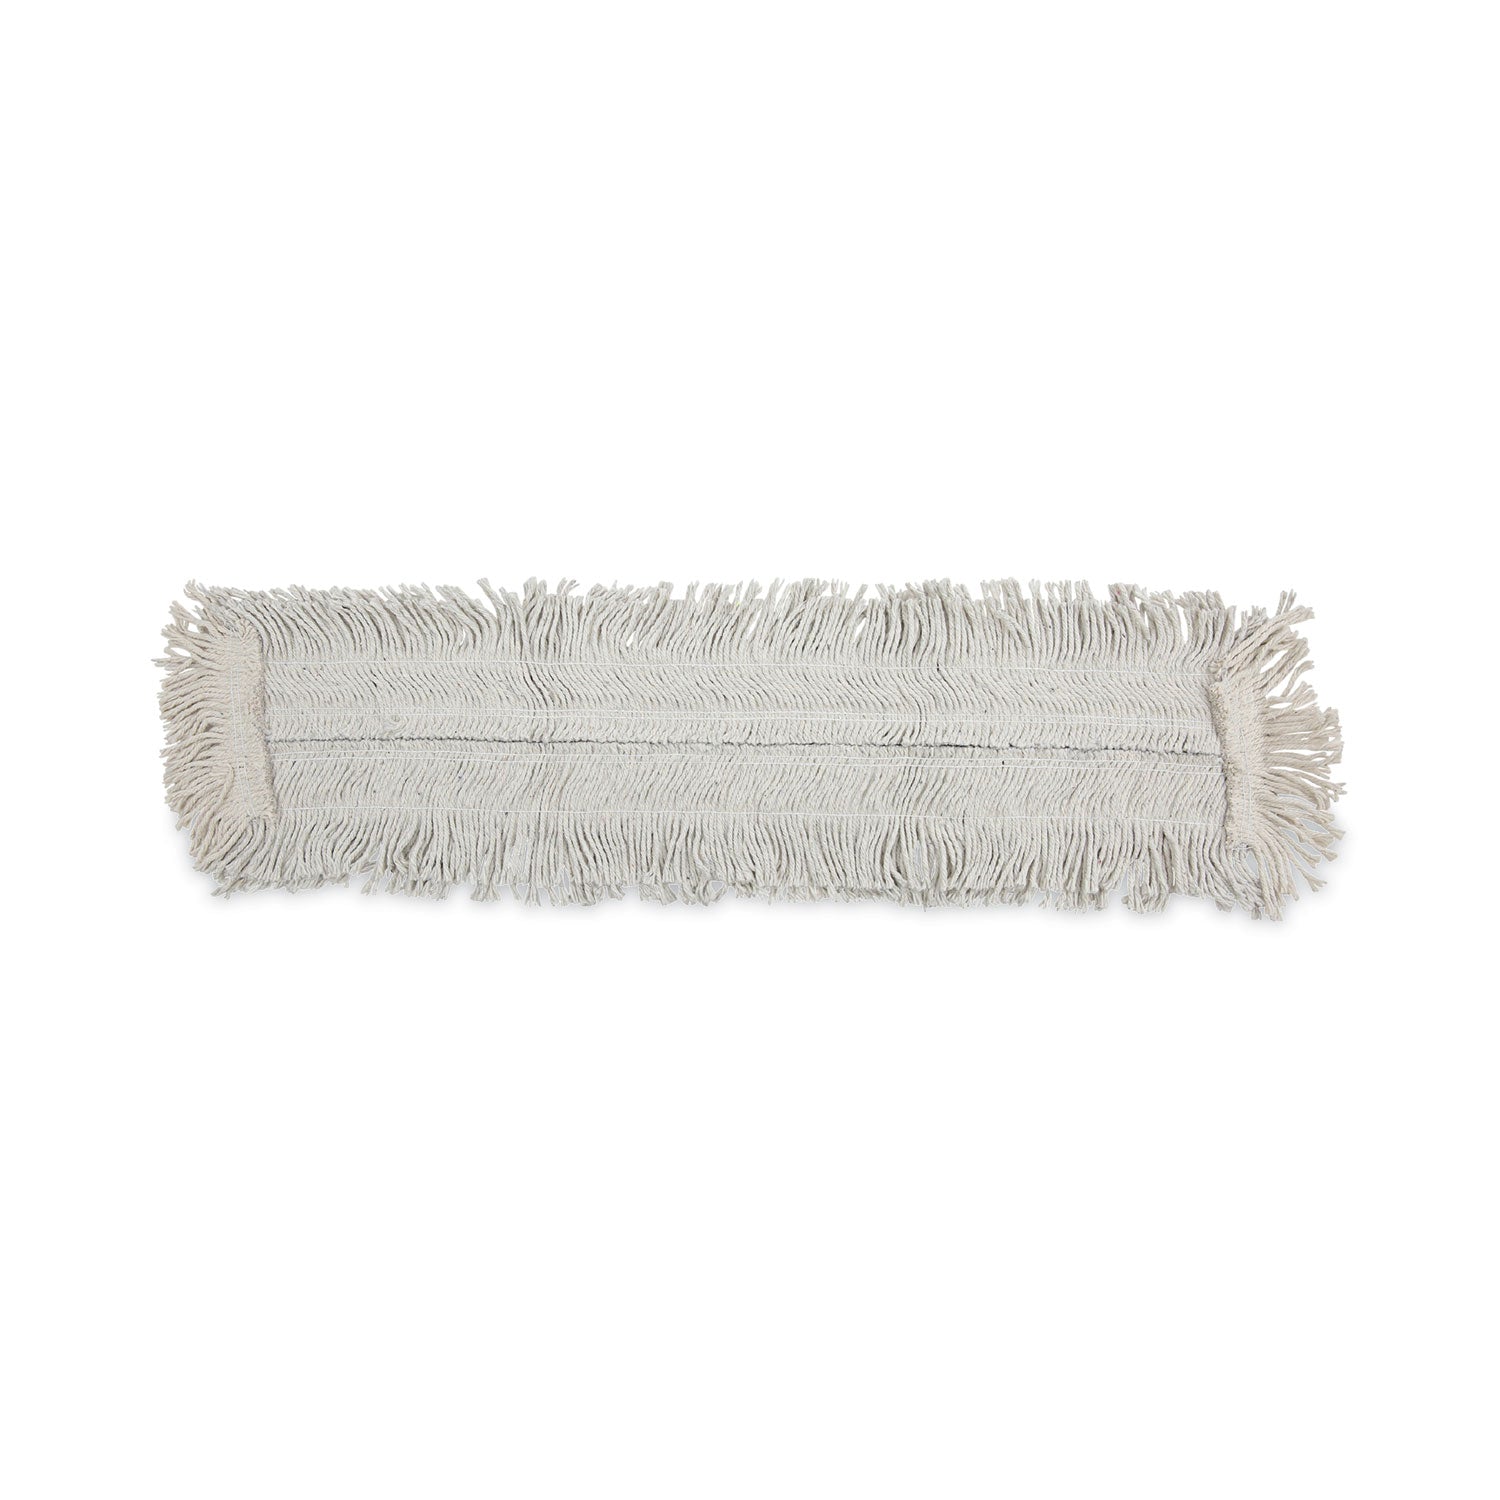 Disposable Dust Mop Head w/Sewn Center Fringe, Cotton/Synthetic, 36w x 5d, White - 